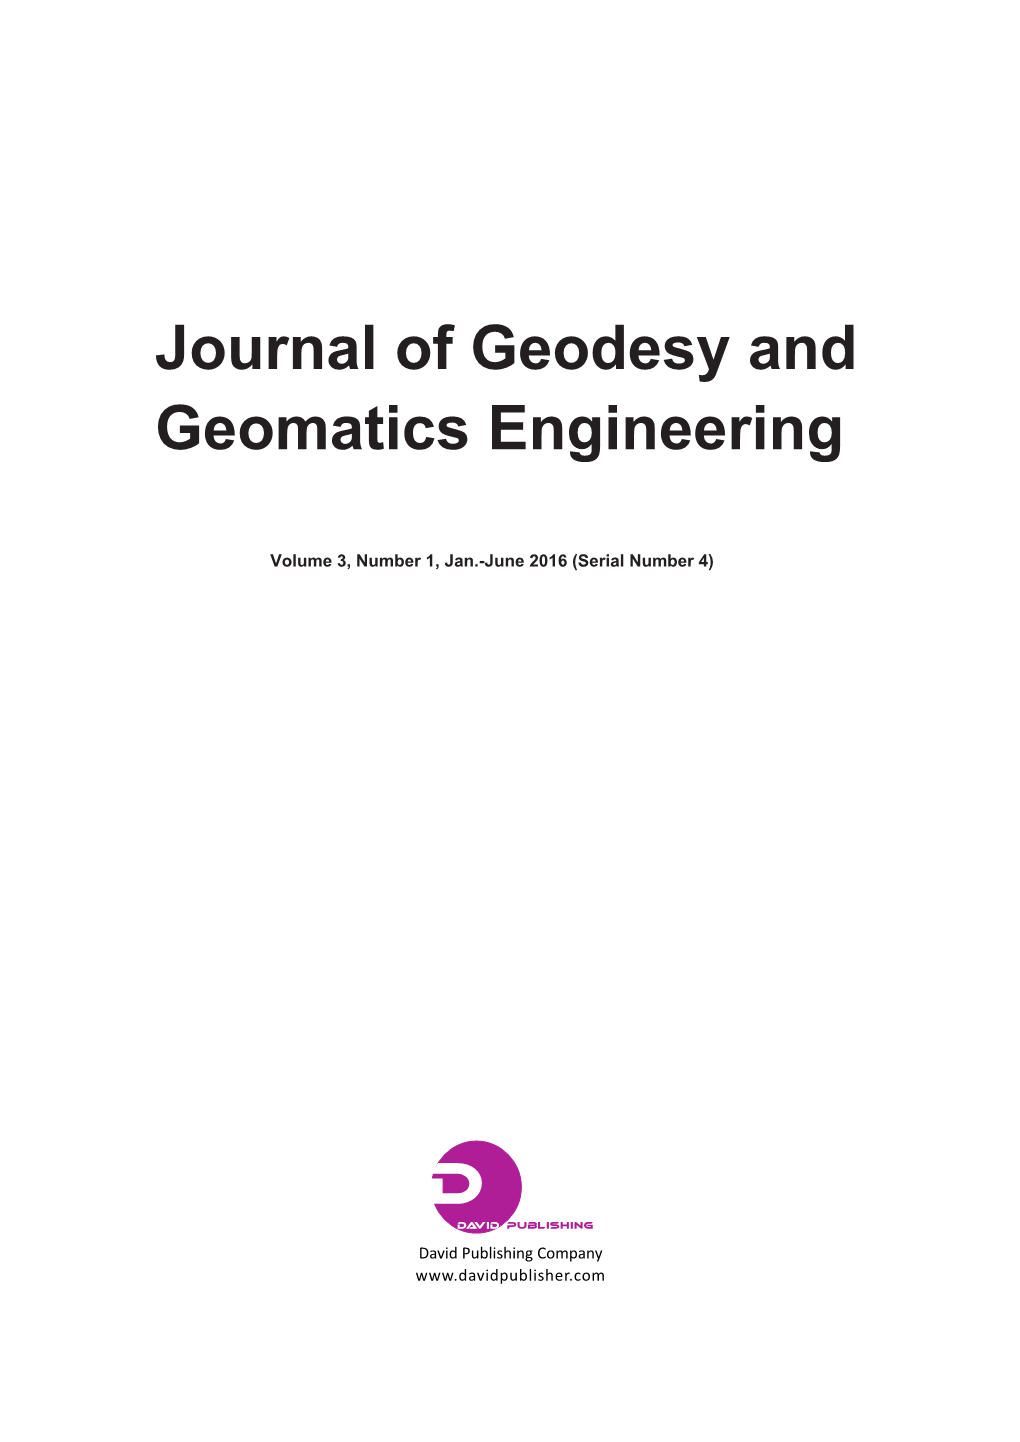 Journal of Geodesy and Geomatics Engineering